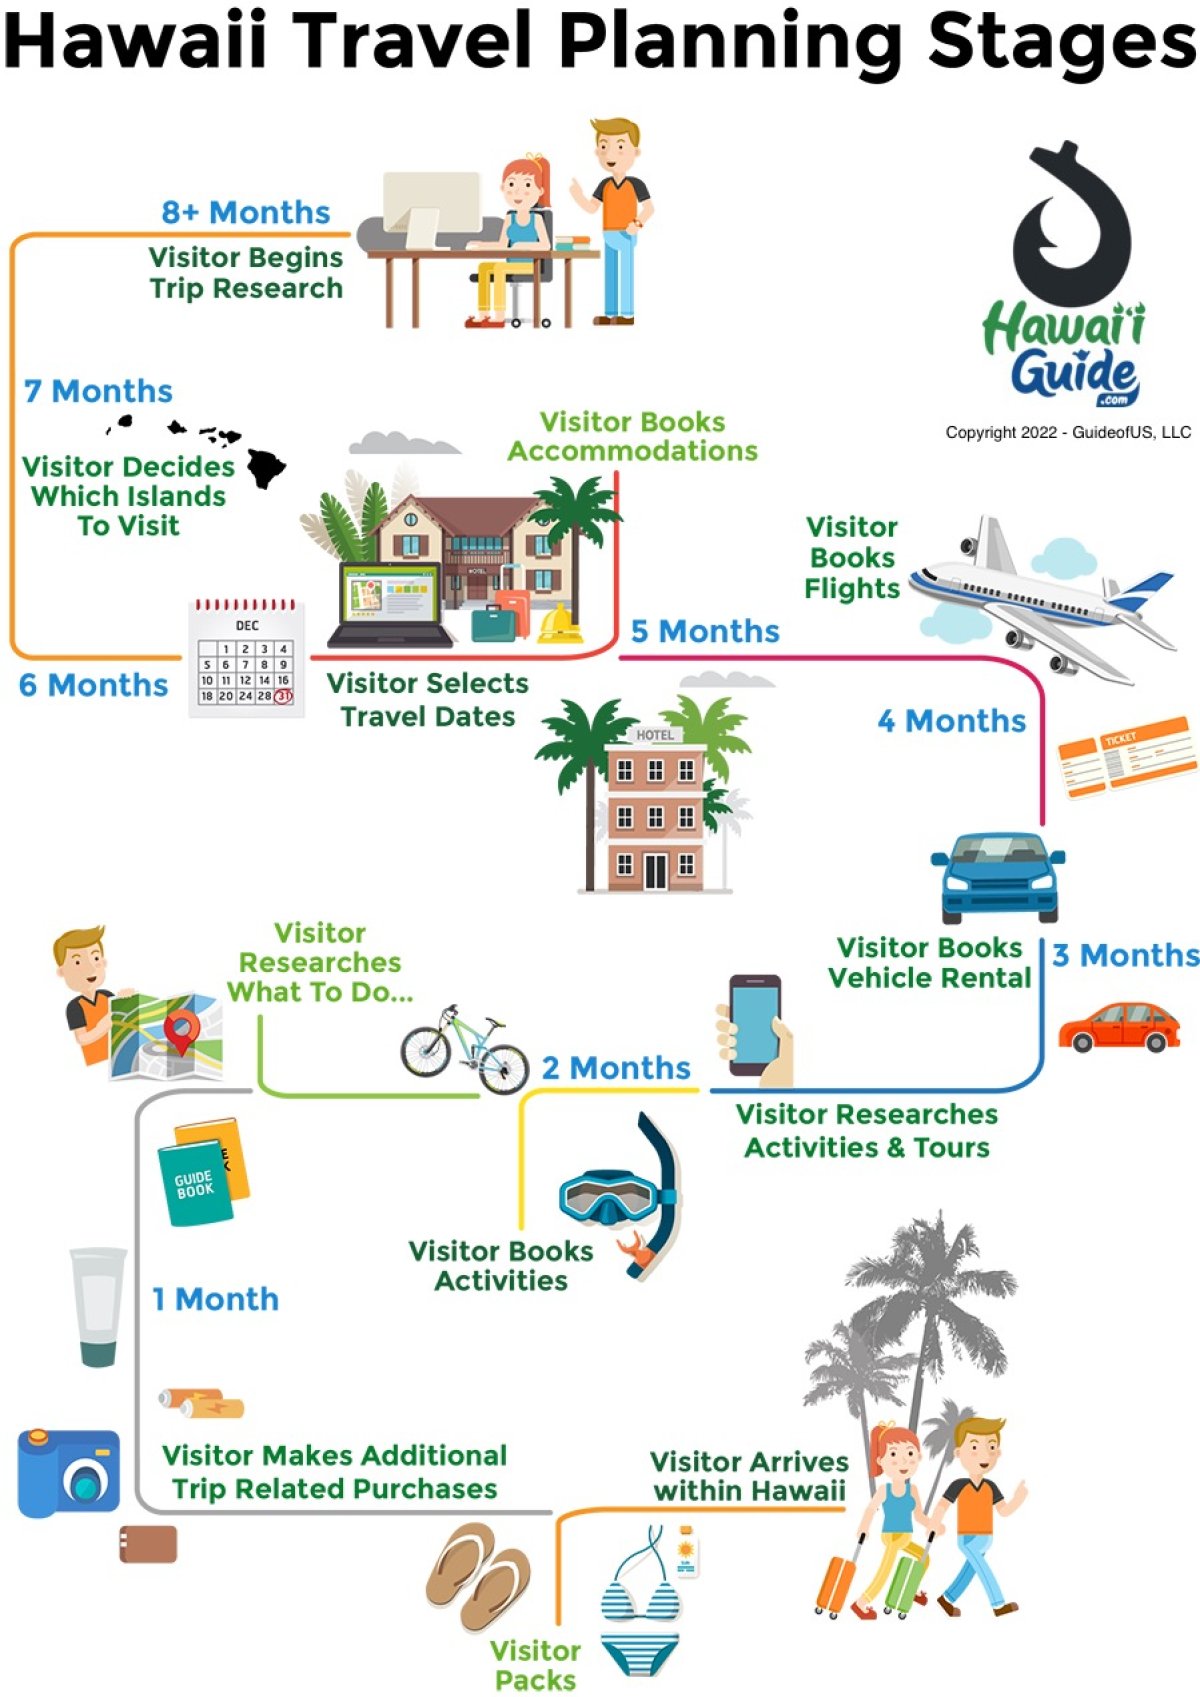 Typical Visitor Planning Timeline 